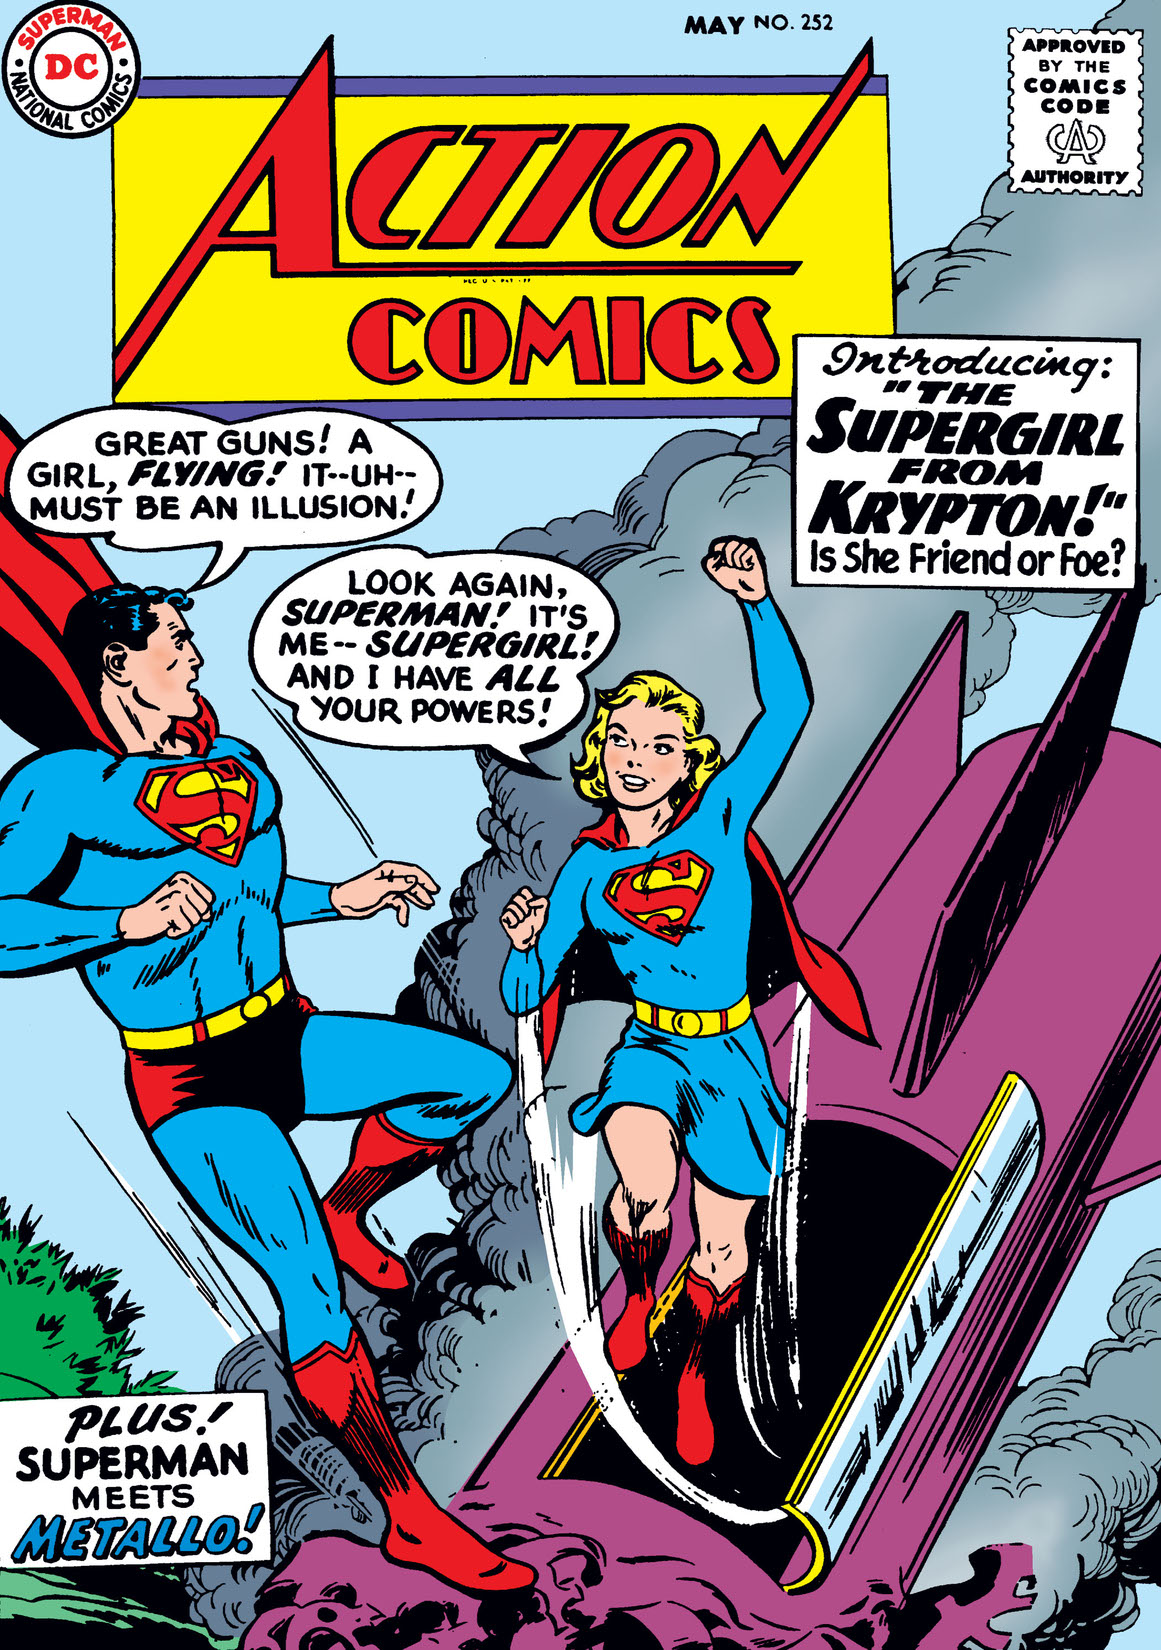 Action Comics (1938-) #252 preview images